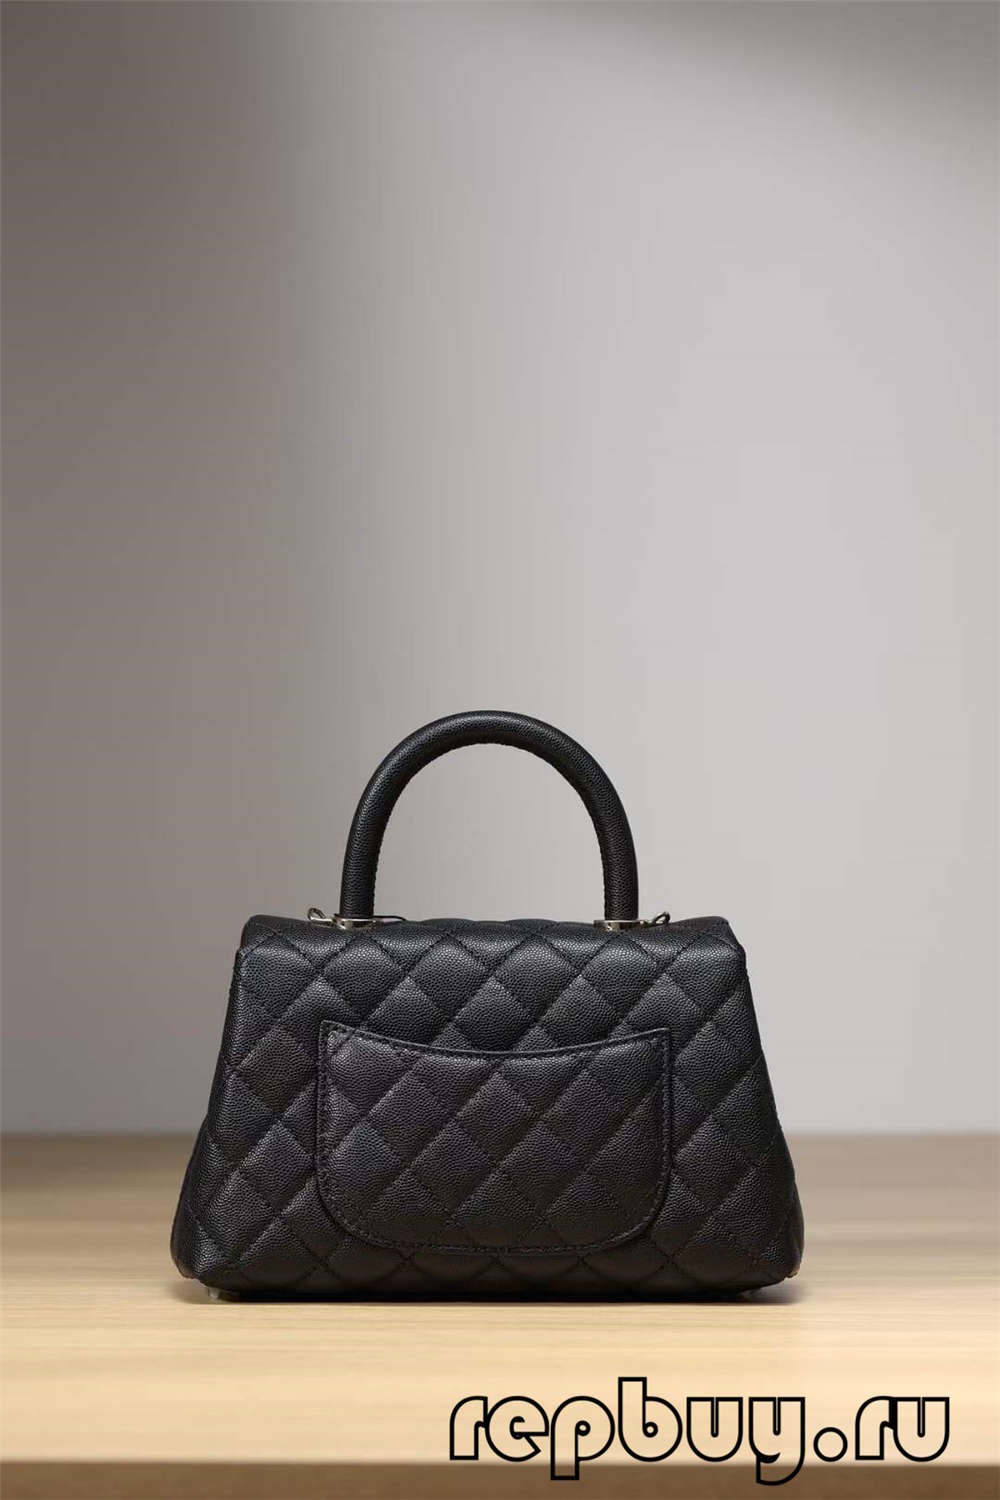 Chanel Coco Handle Top Replica Handbag Black Gold Buckle Look（2022 更新）-Best Quality Fake Louis Vuitton Bag Online Store, Replica Designer bag ru